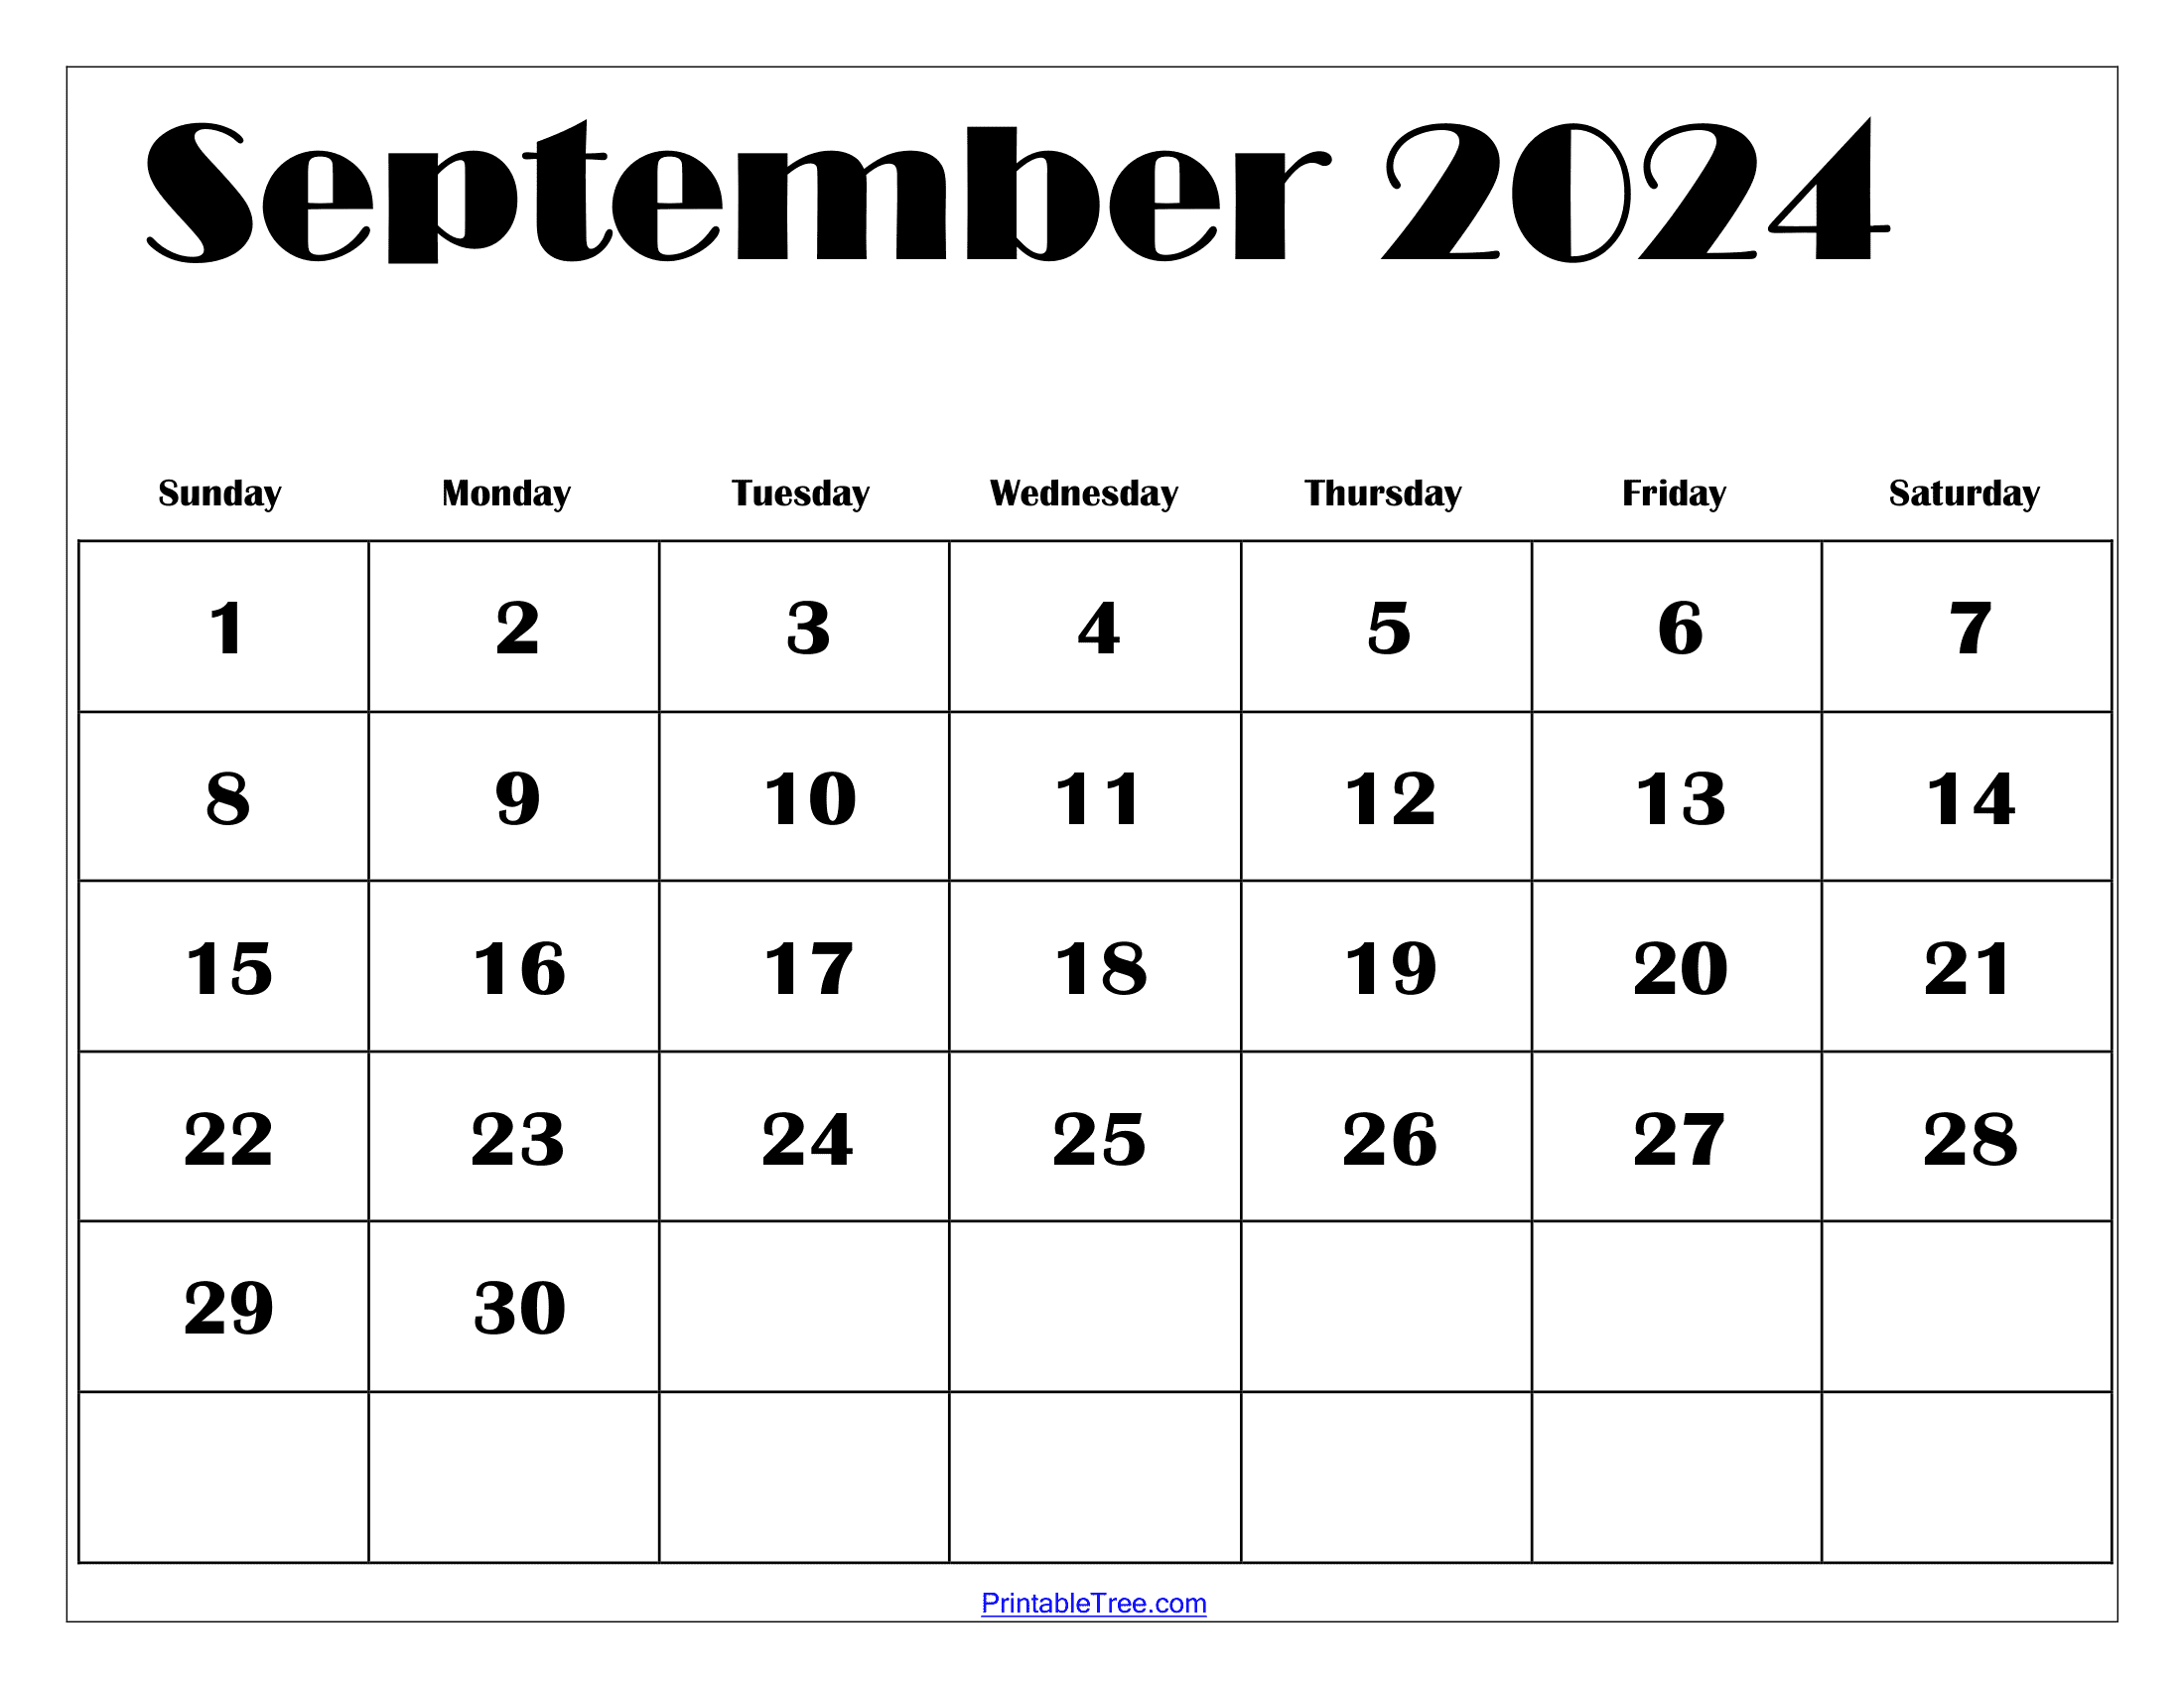 September 2024 Calendar Printable Pdf With Holidays inside Free Printable Calendar 2024 For September